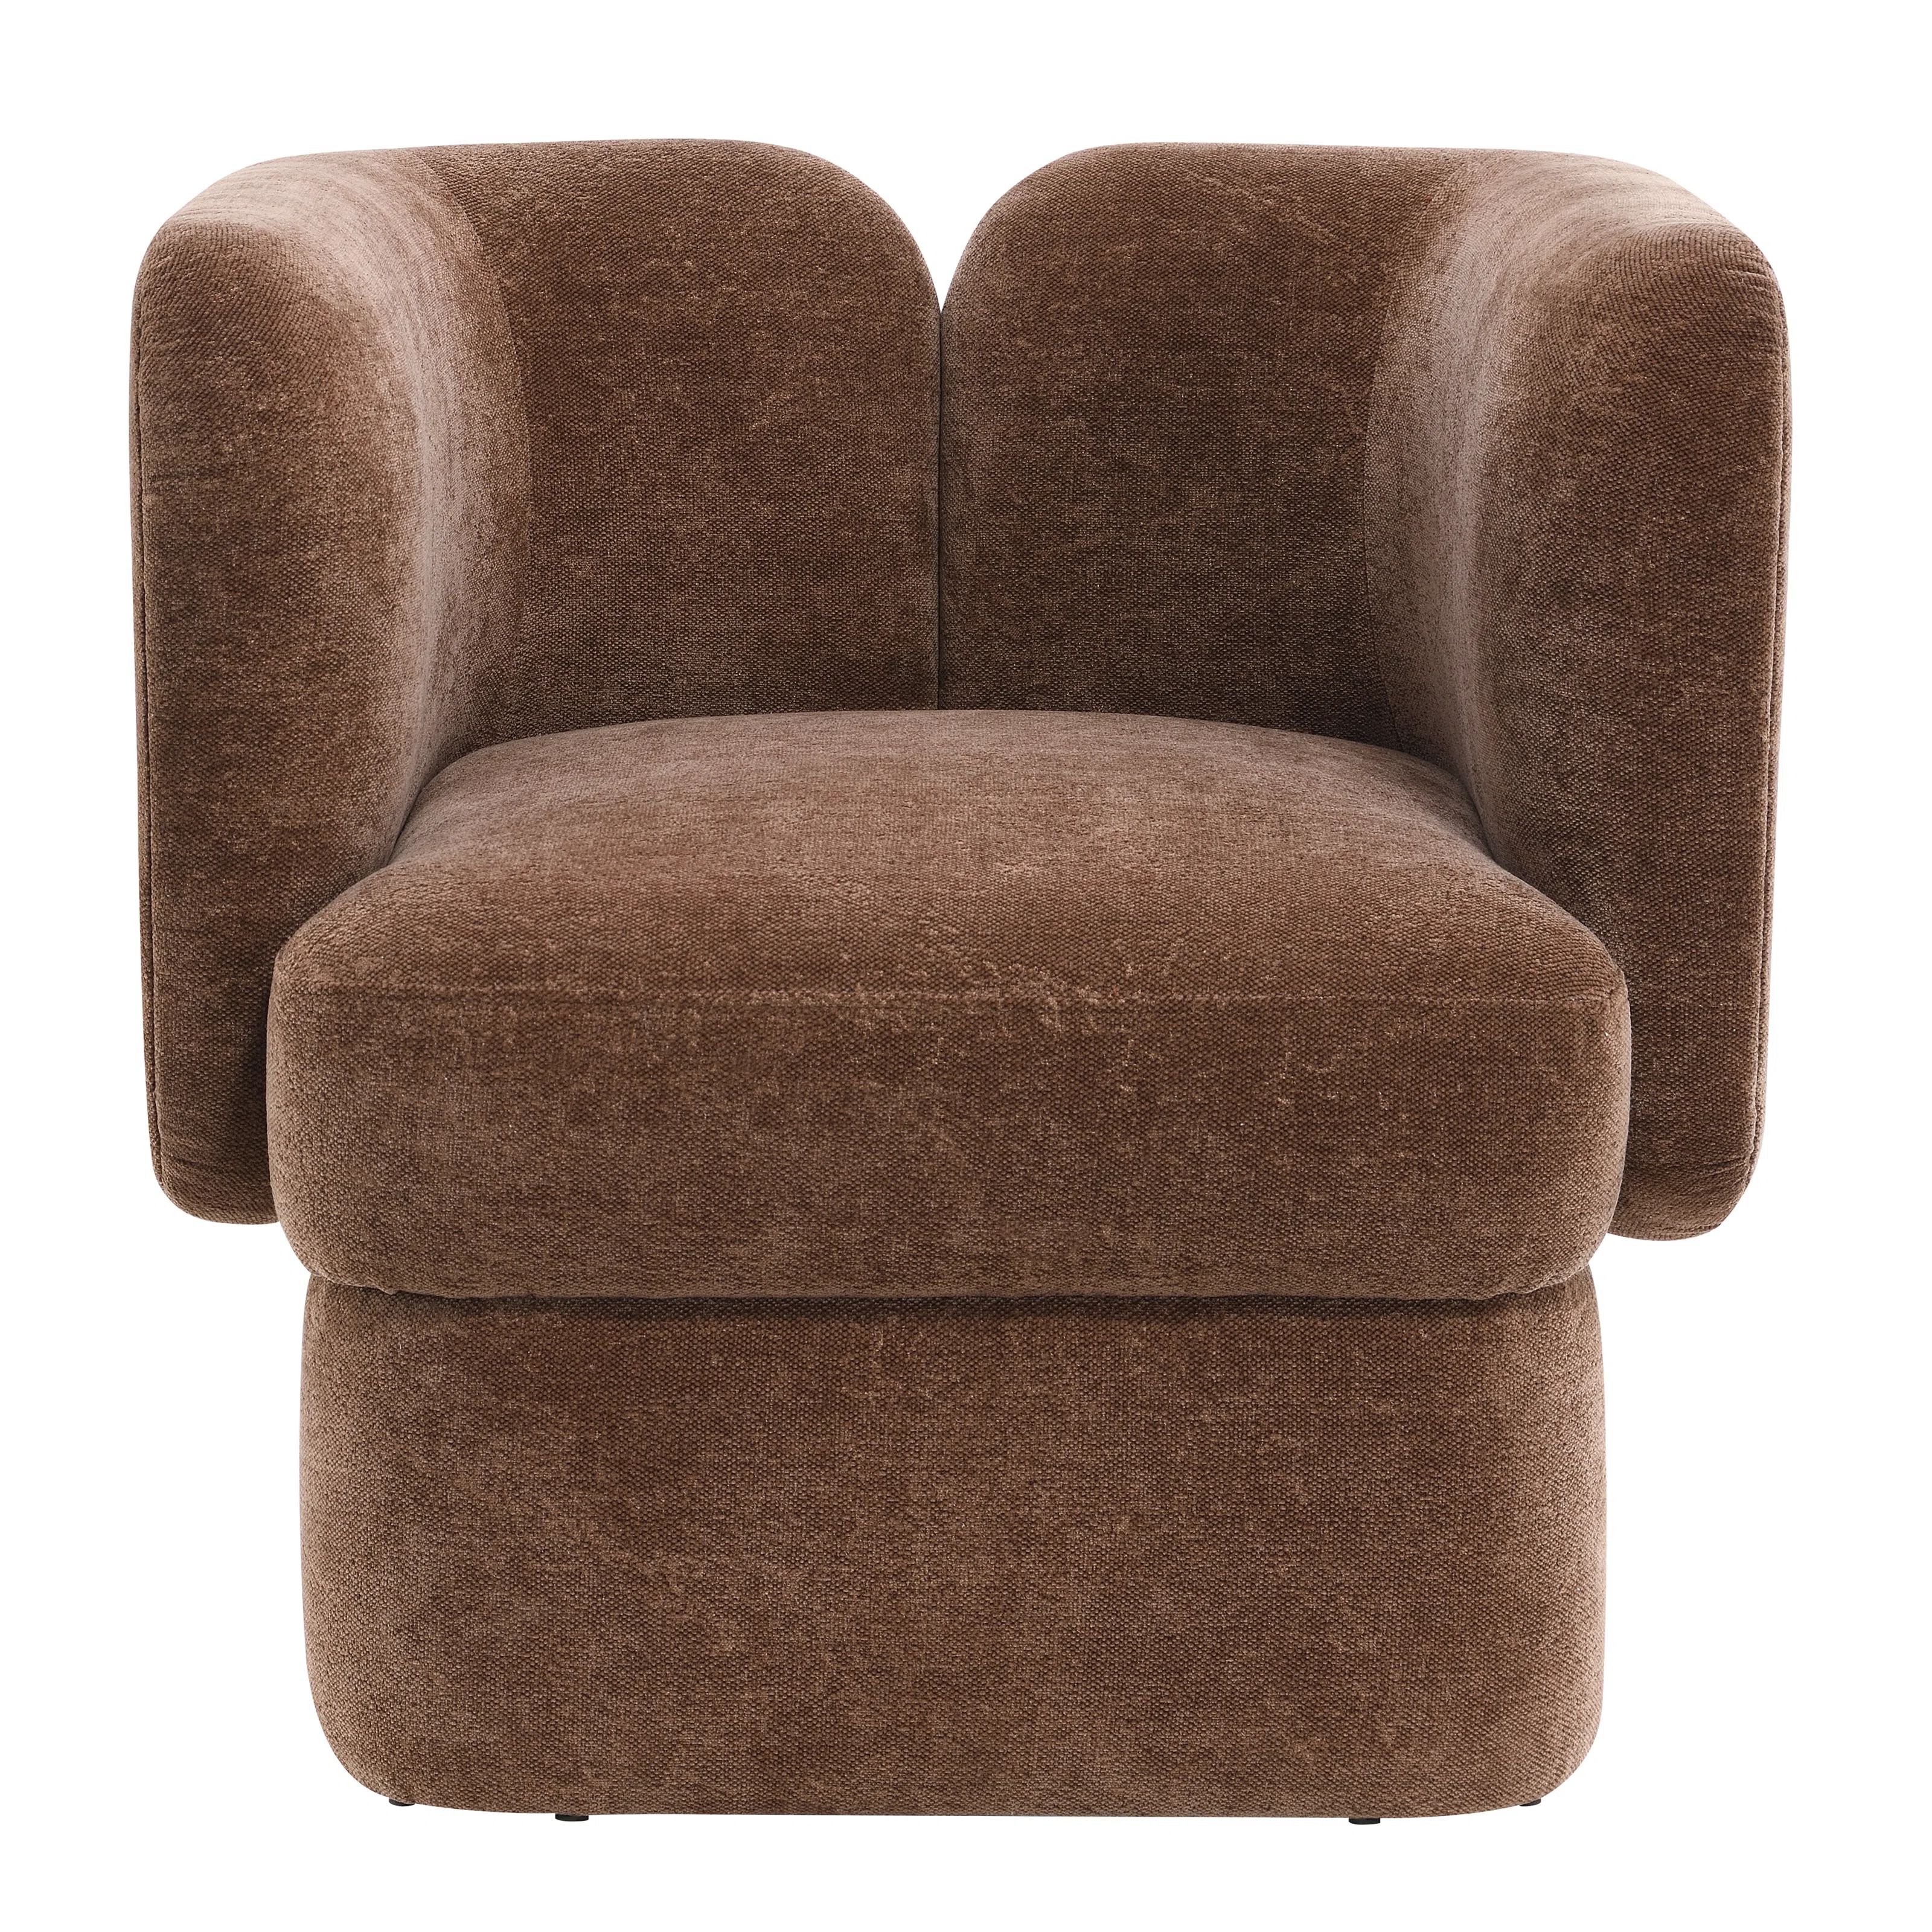 Holliday Upholstered Barrel Chair | Wayfair North America